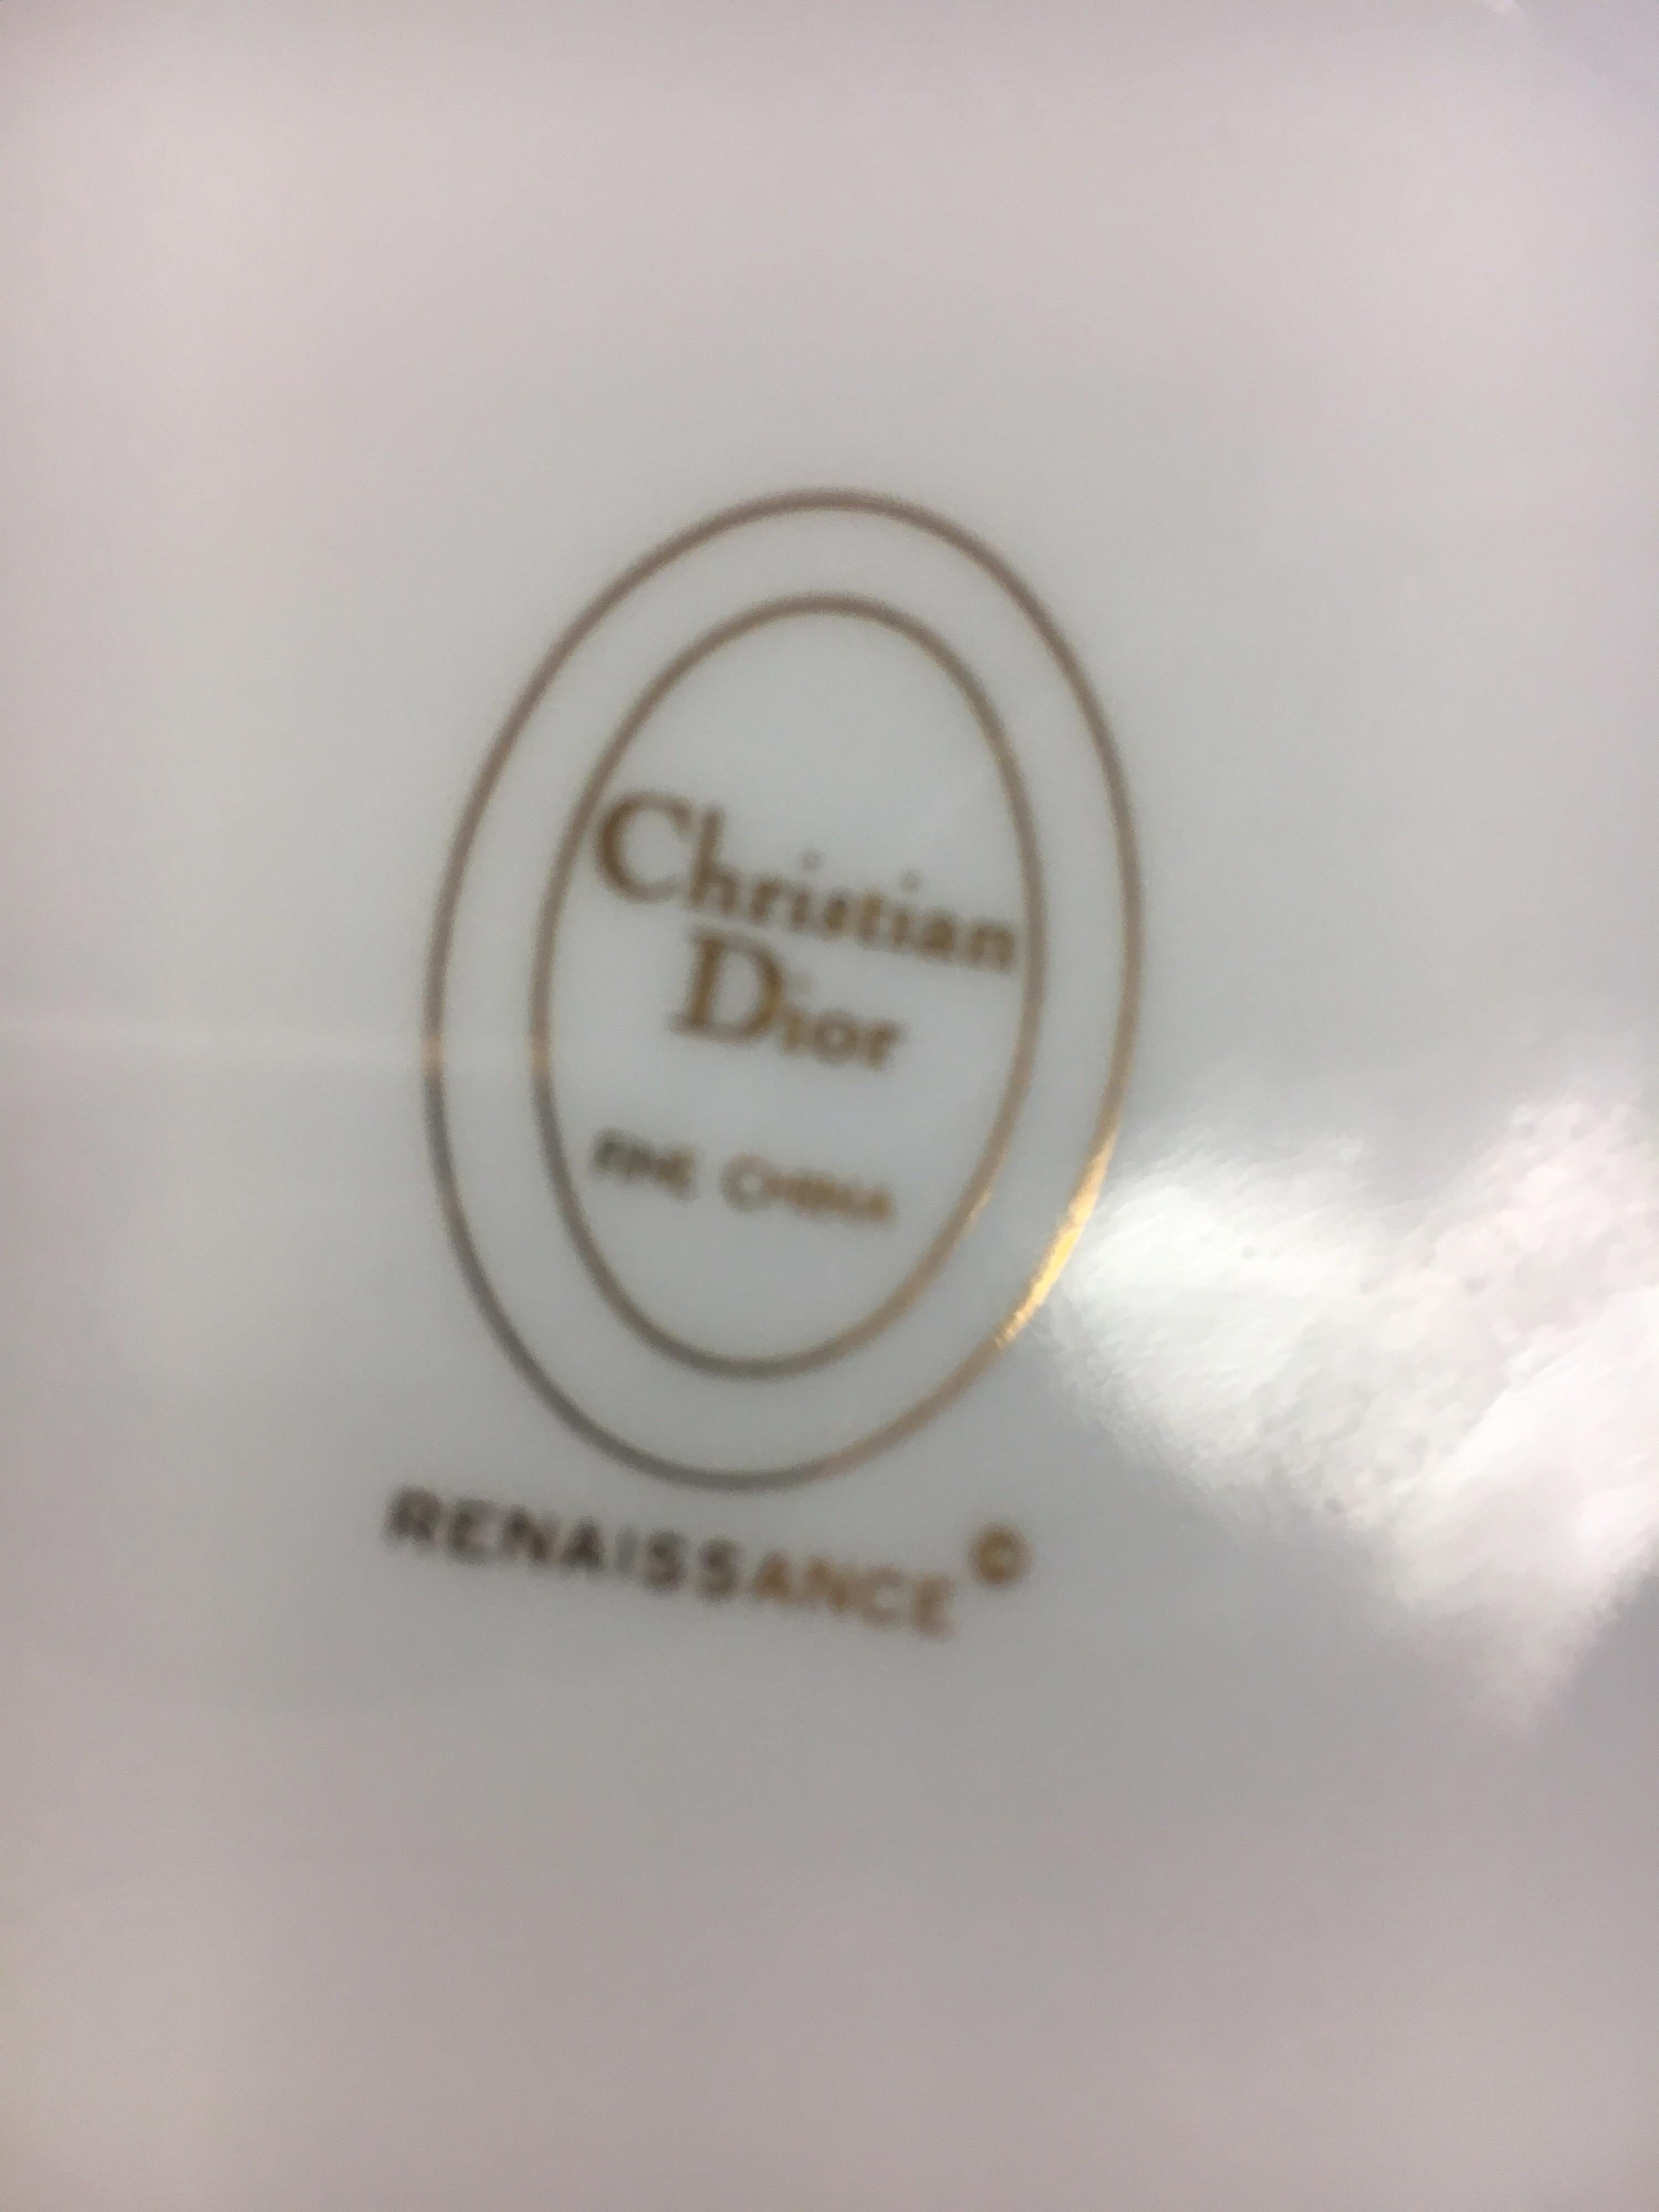 Christian Dior Renaissance Porcelain Tea Coffee Service Cream and Sugar 1